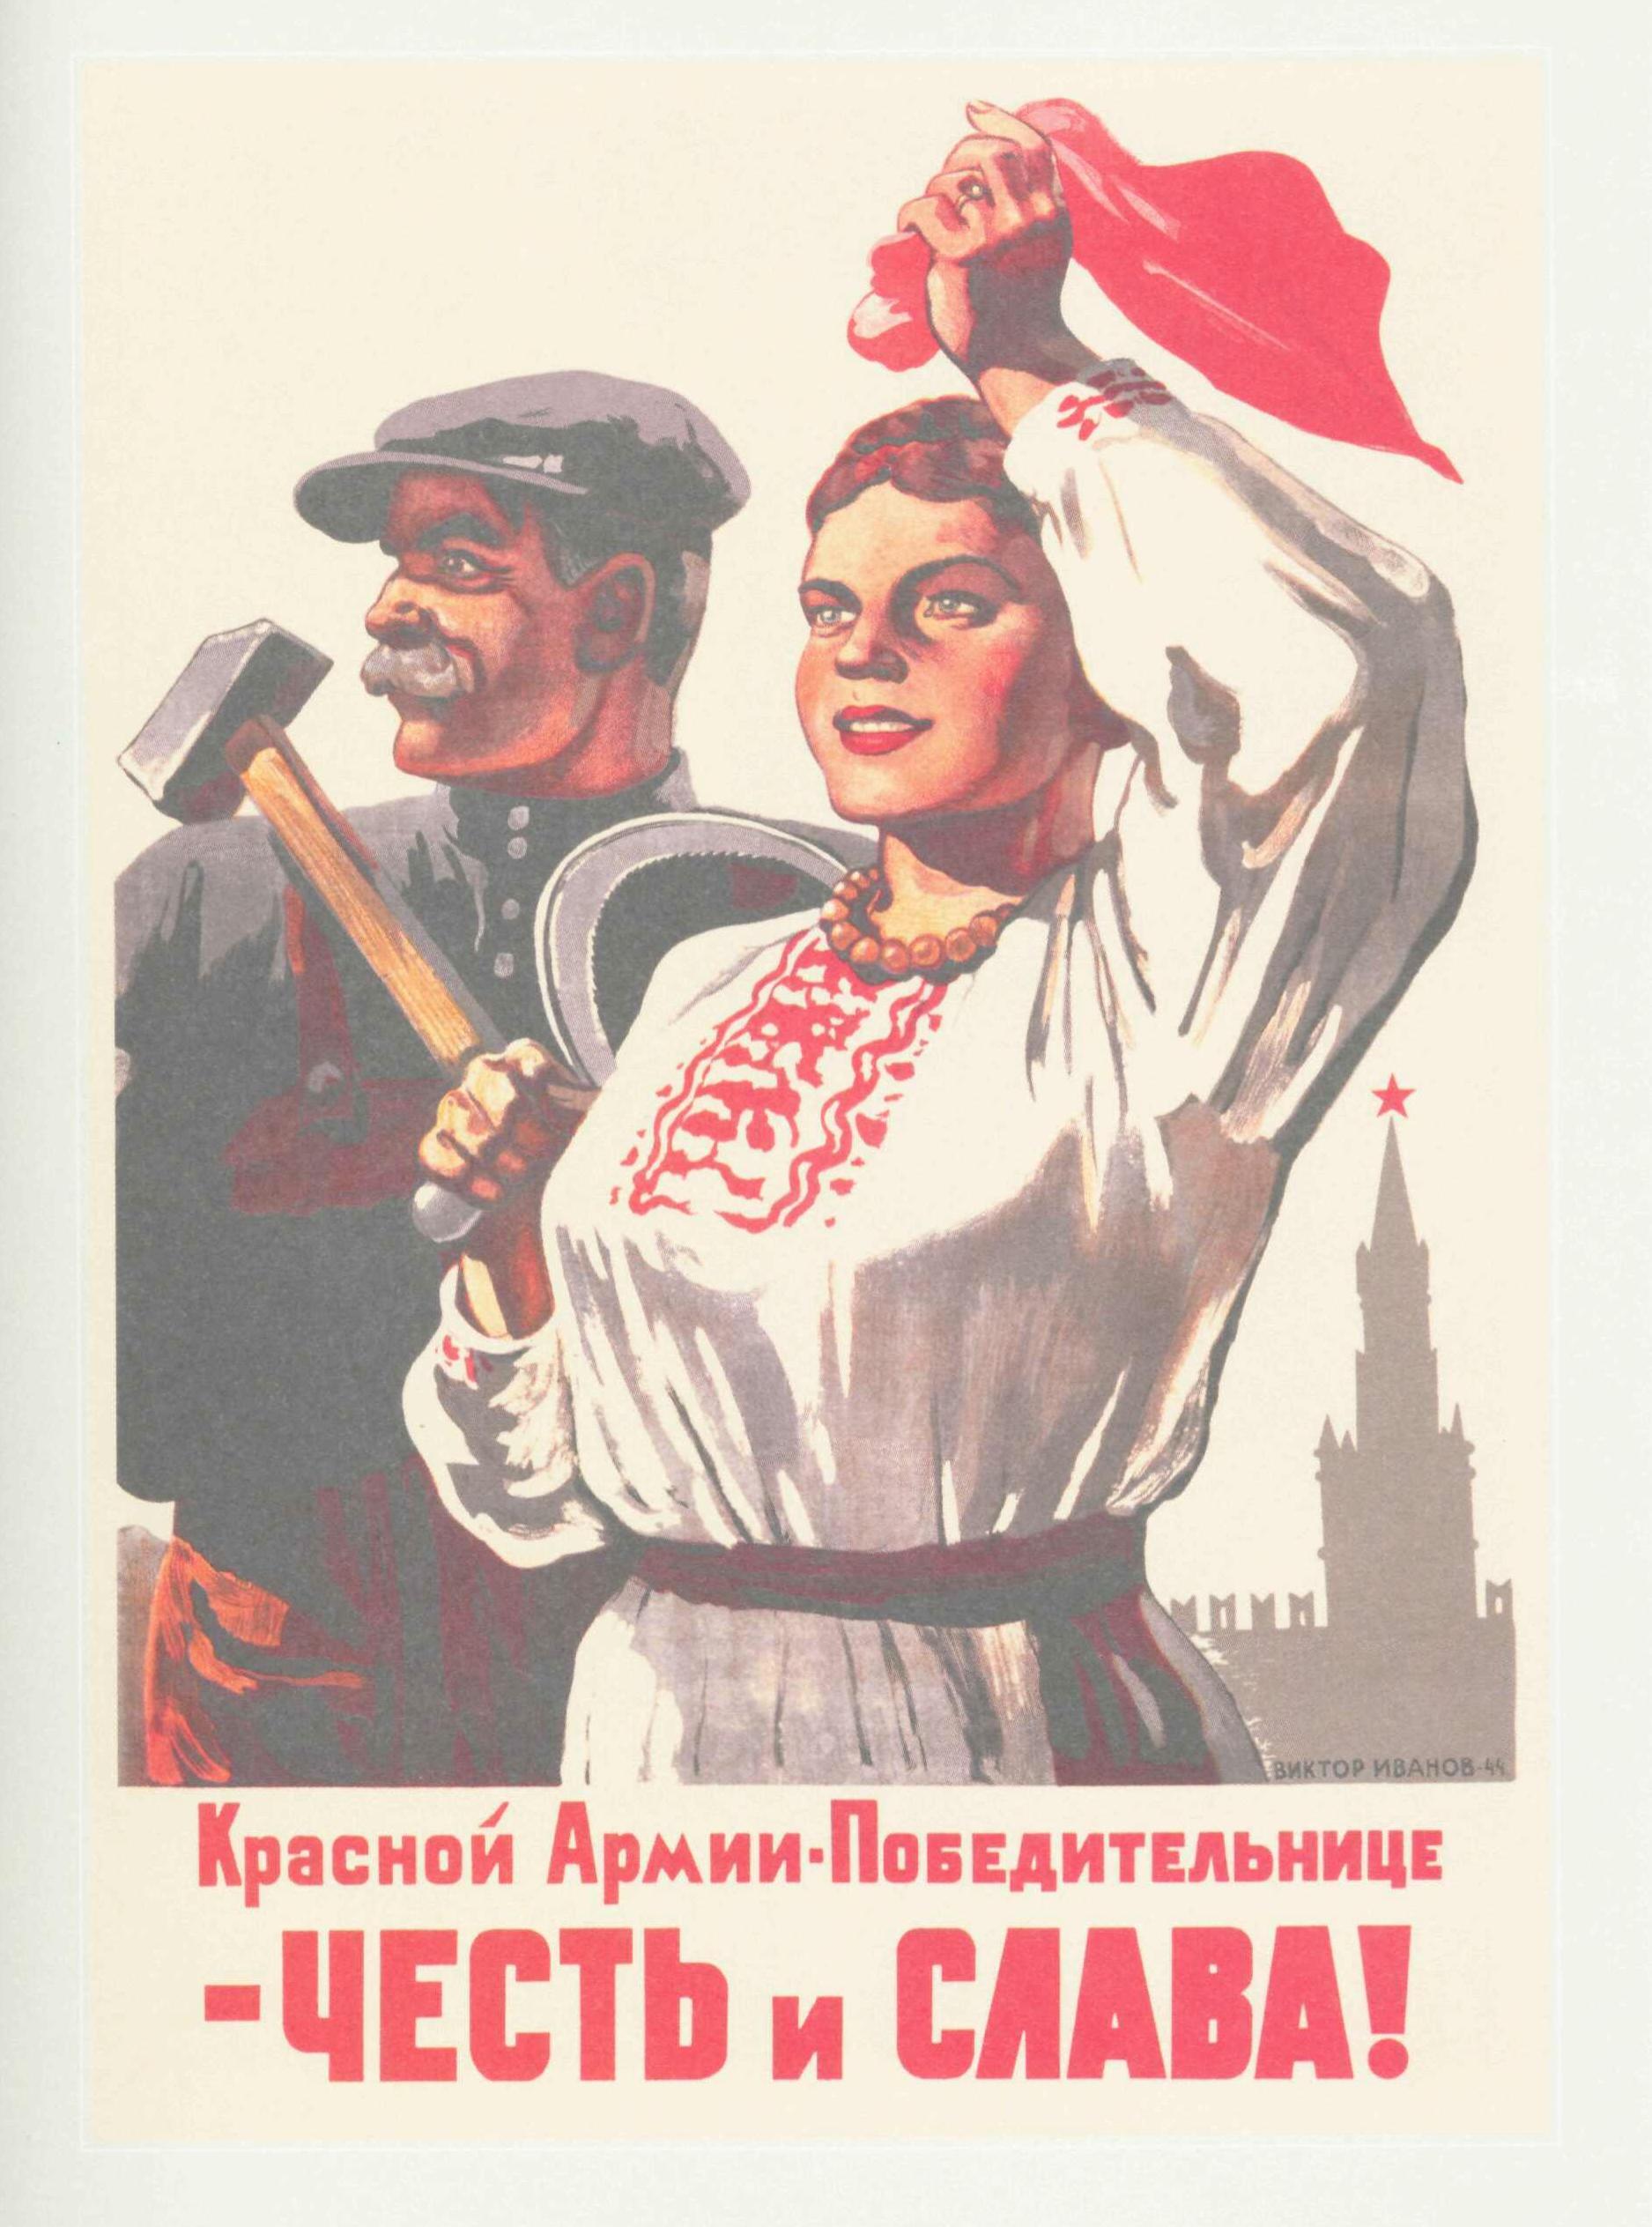 Плакат женщины войны. Плакаты СССР Слава красной армии. Красная армия плакаты. Плакаты крестной армии. Агитационные плакаты.